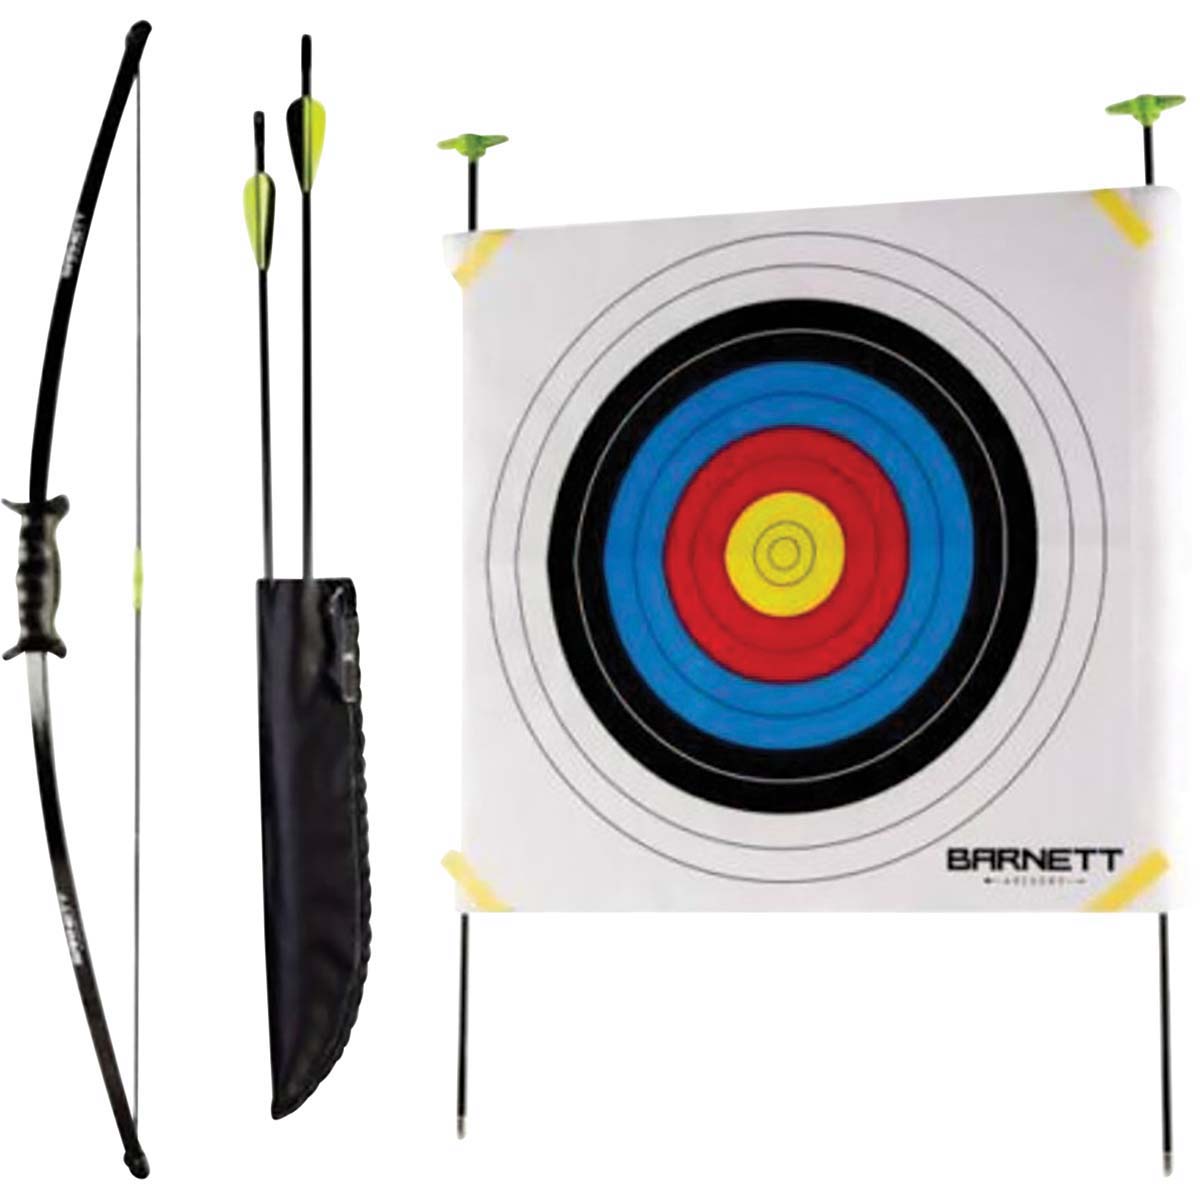 Barnett Youth Archery Combo Kit Set